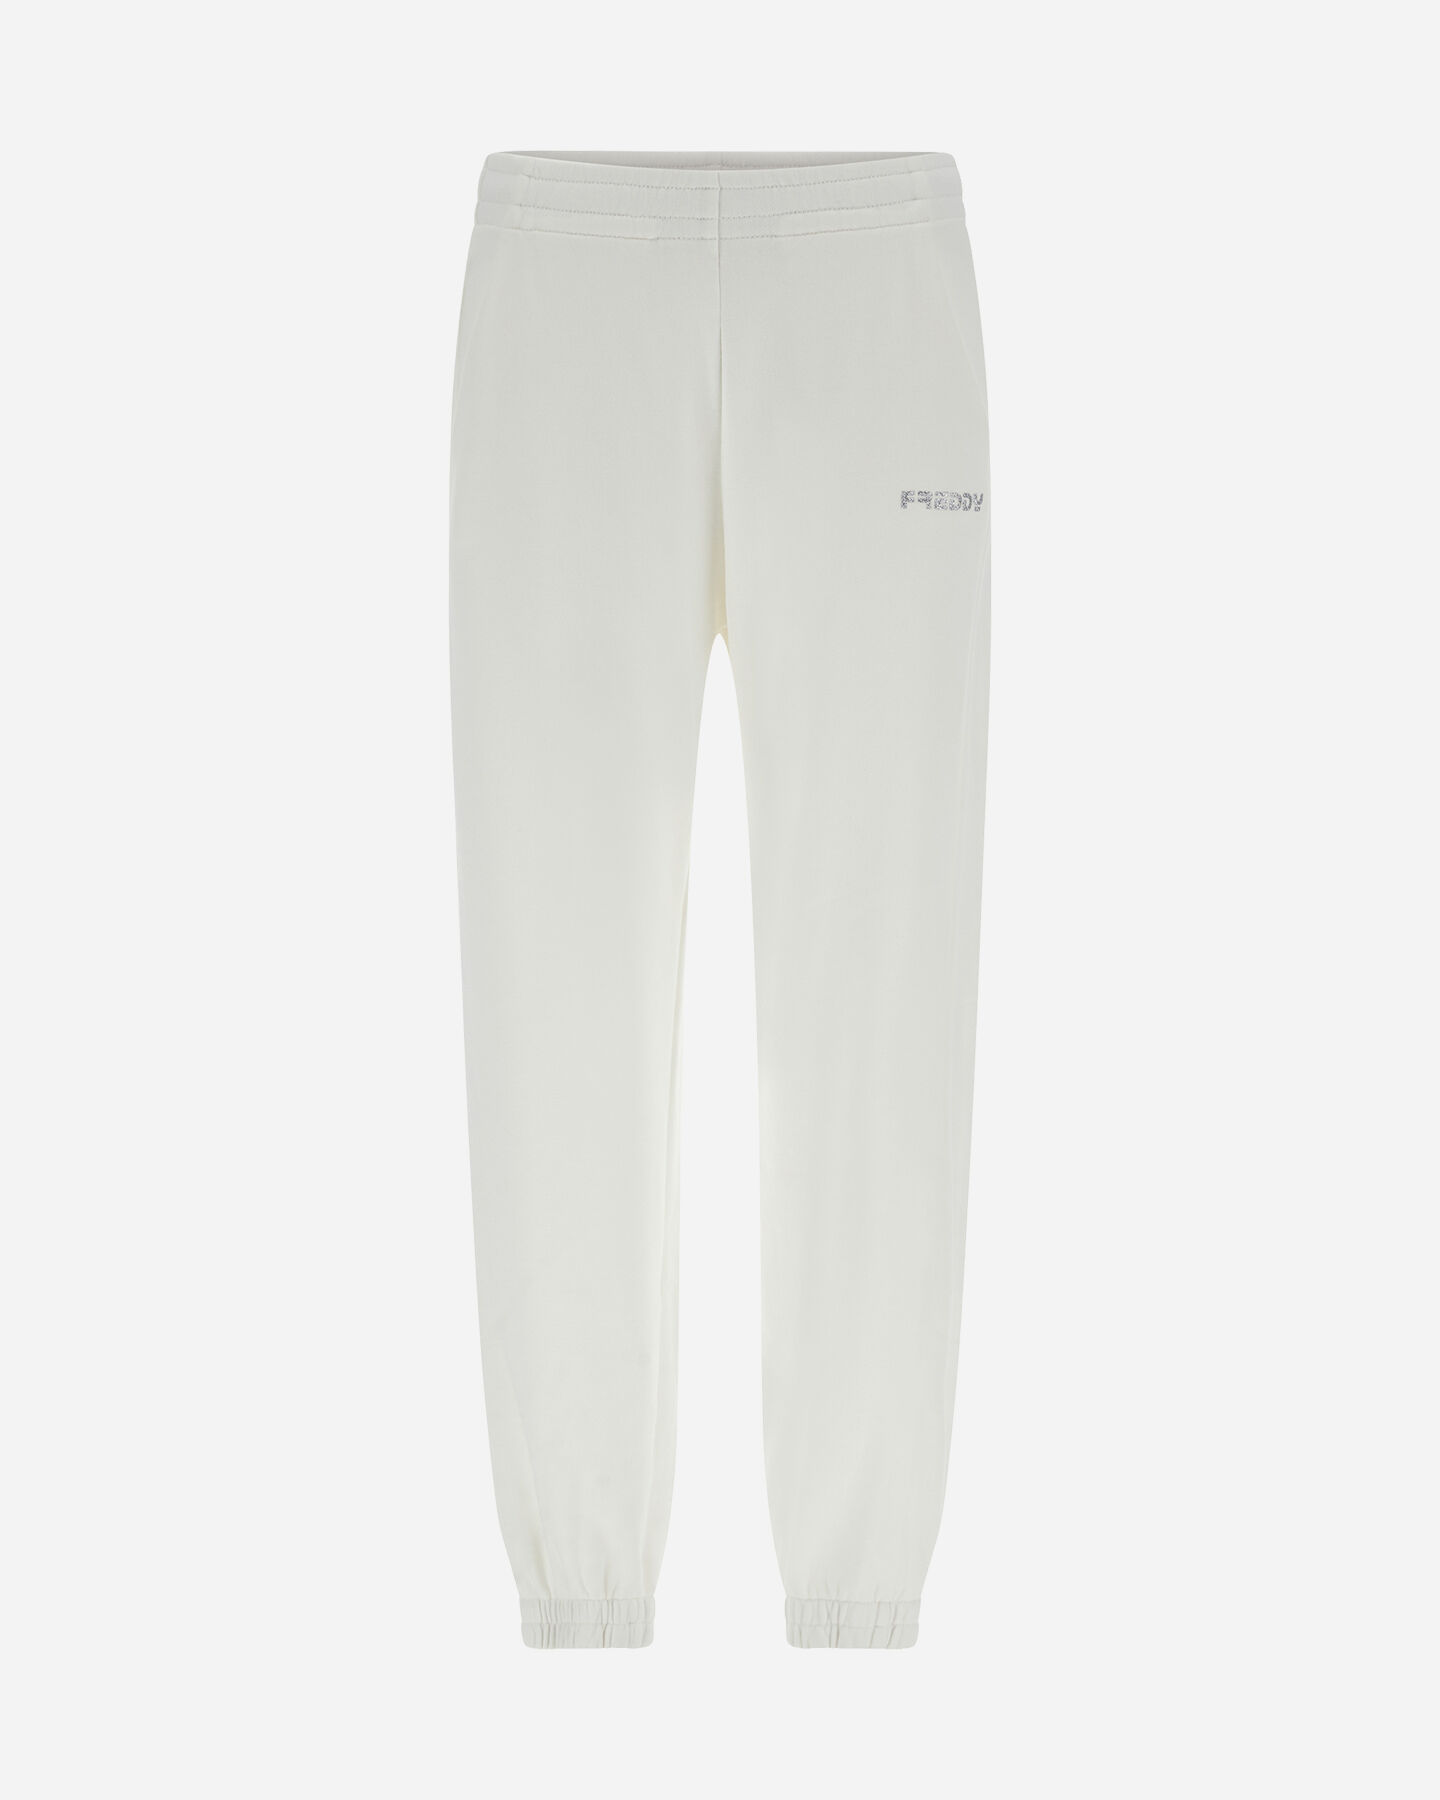  Pantalone FREDDY SMALL LOGO W S5551172|W72X-|S scatto 0